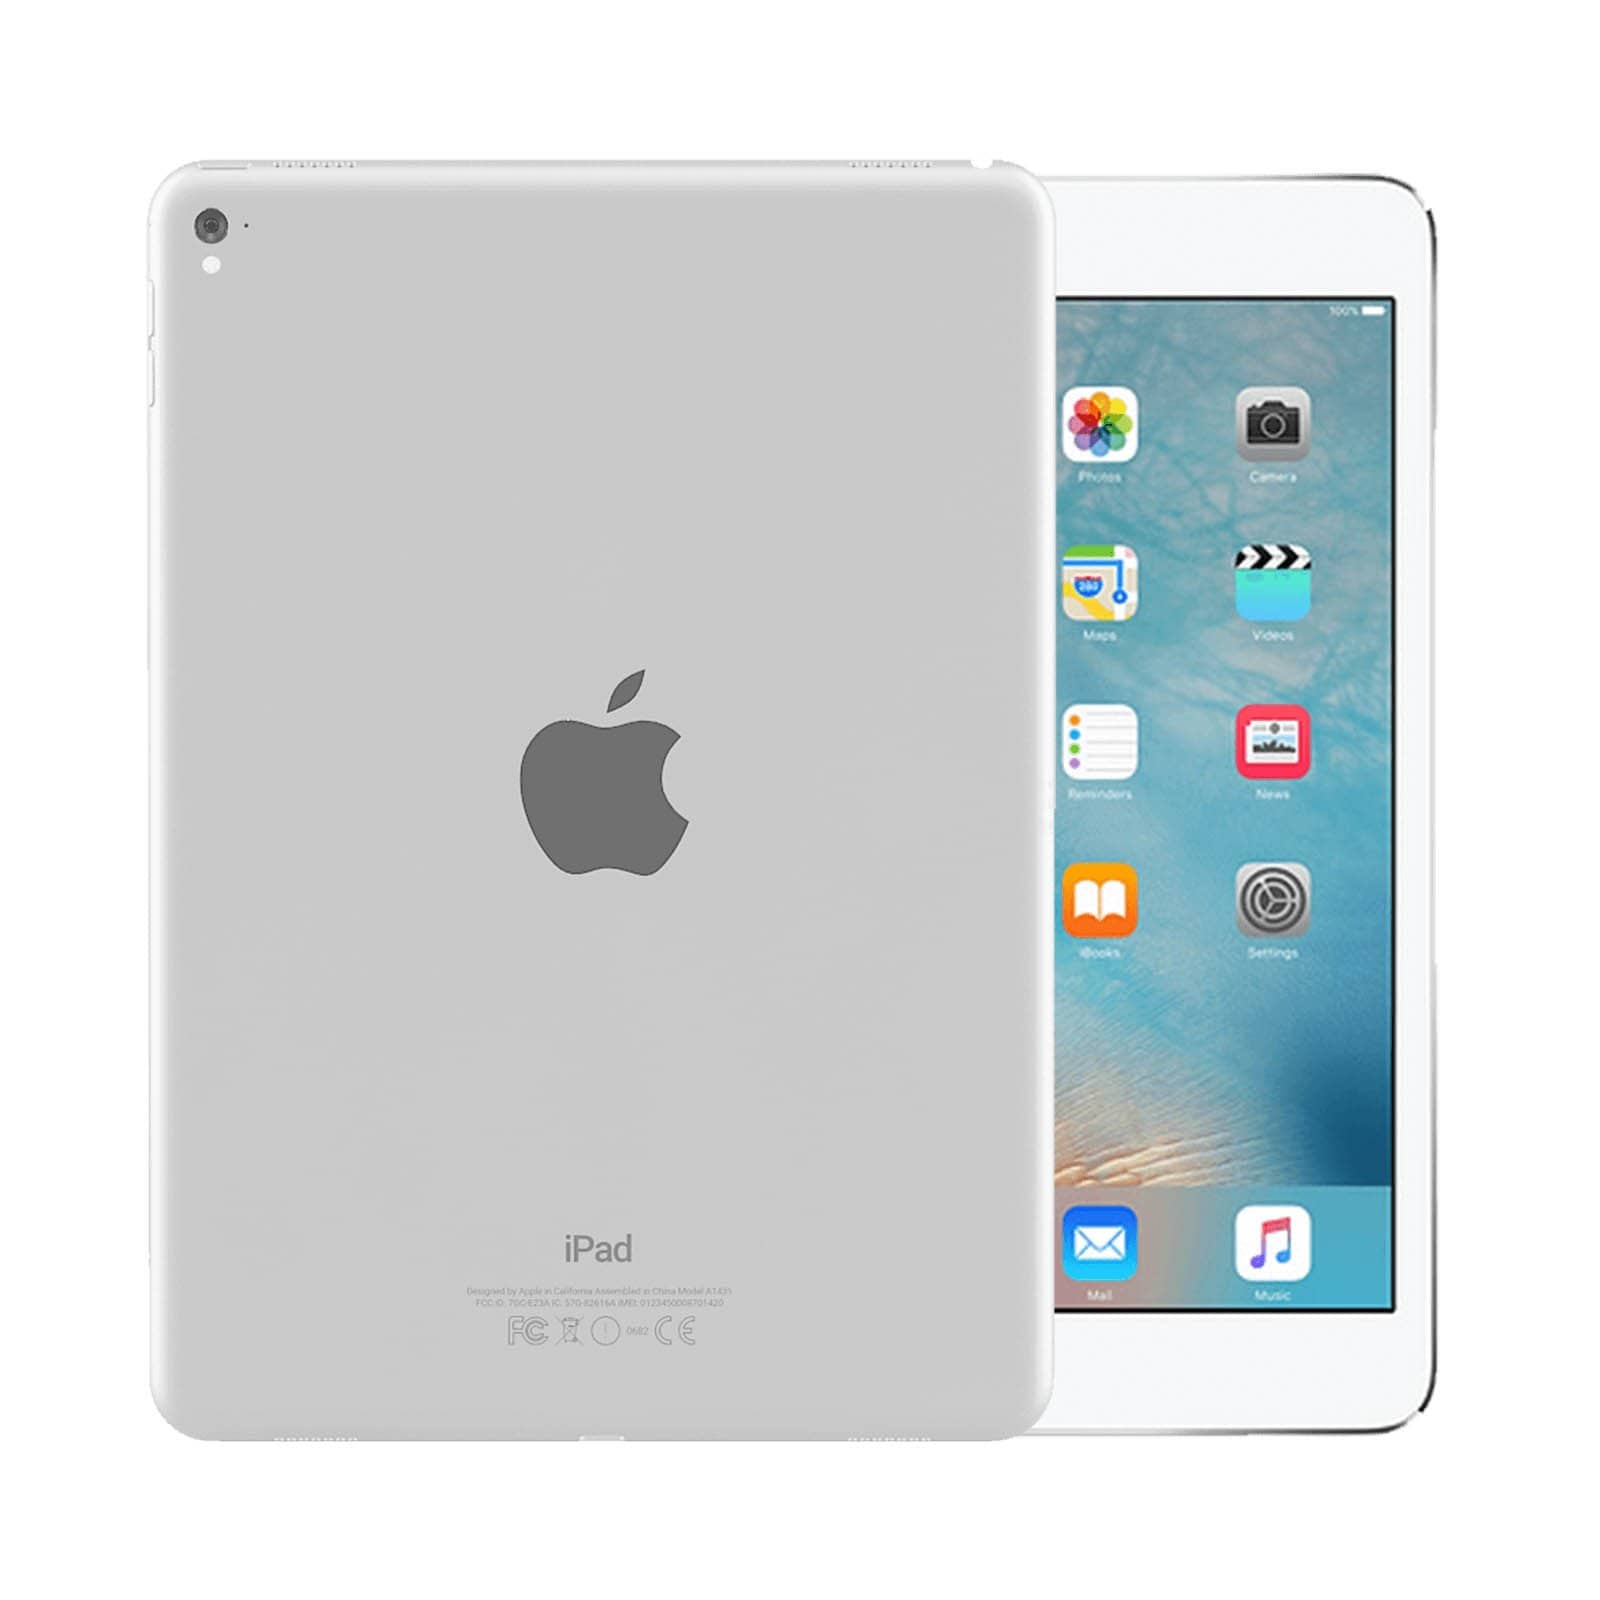 iPad Pro 9.7 Inch 256GB Silver Good - WiFi 256GB Silver Good